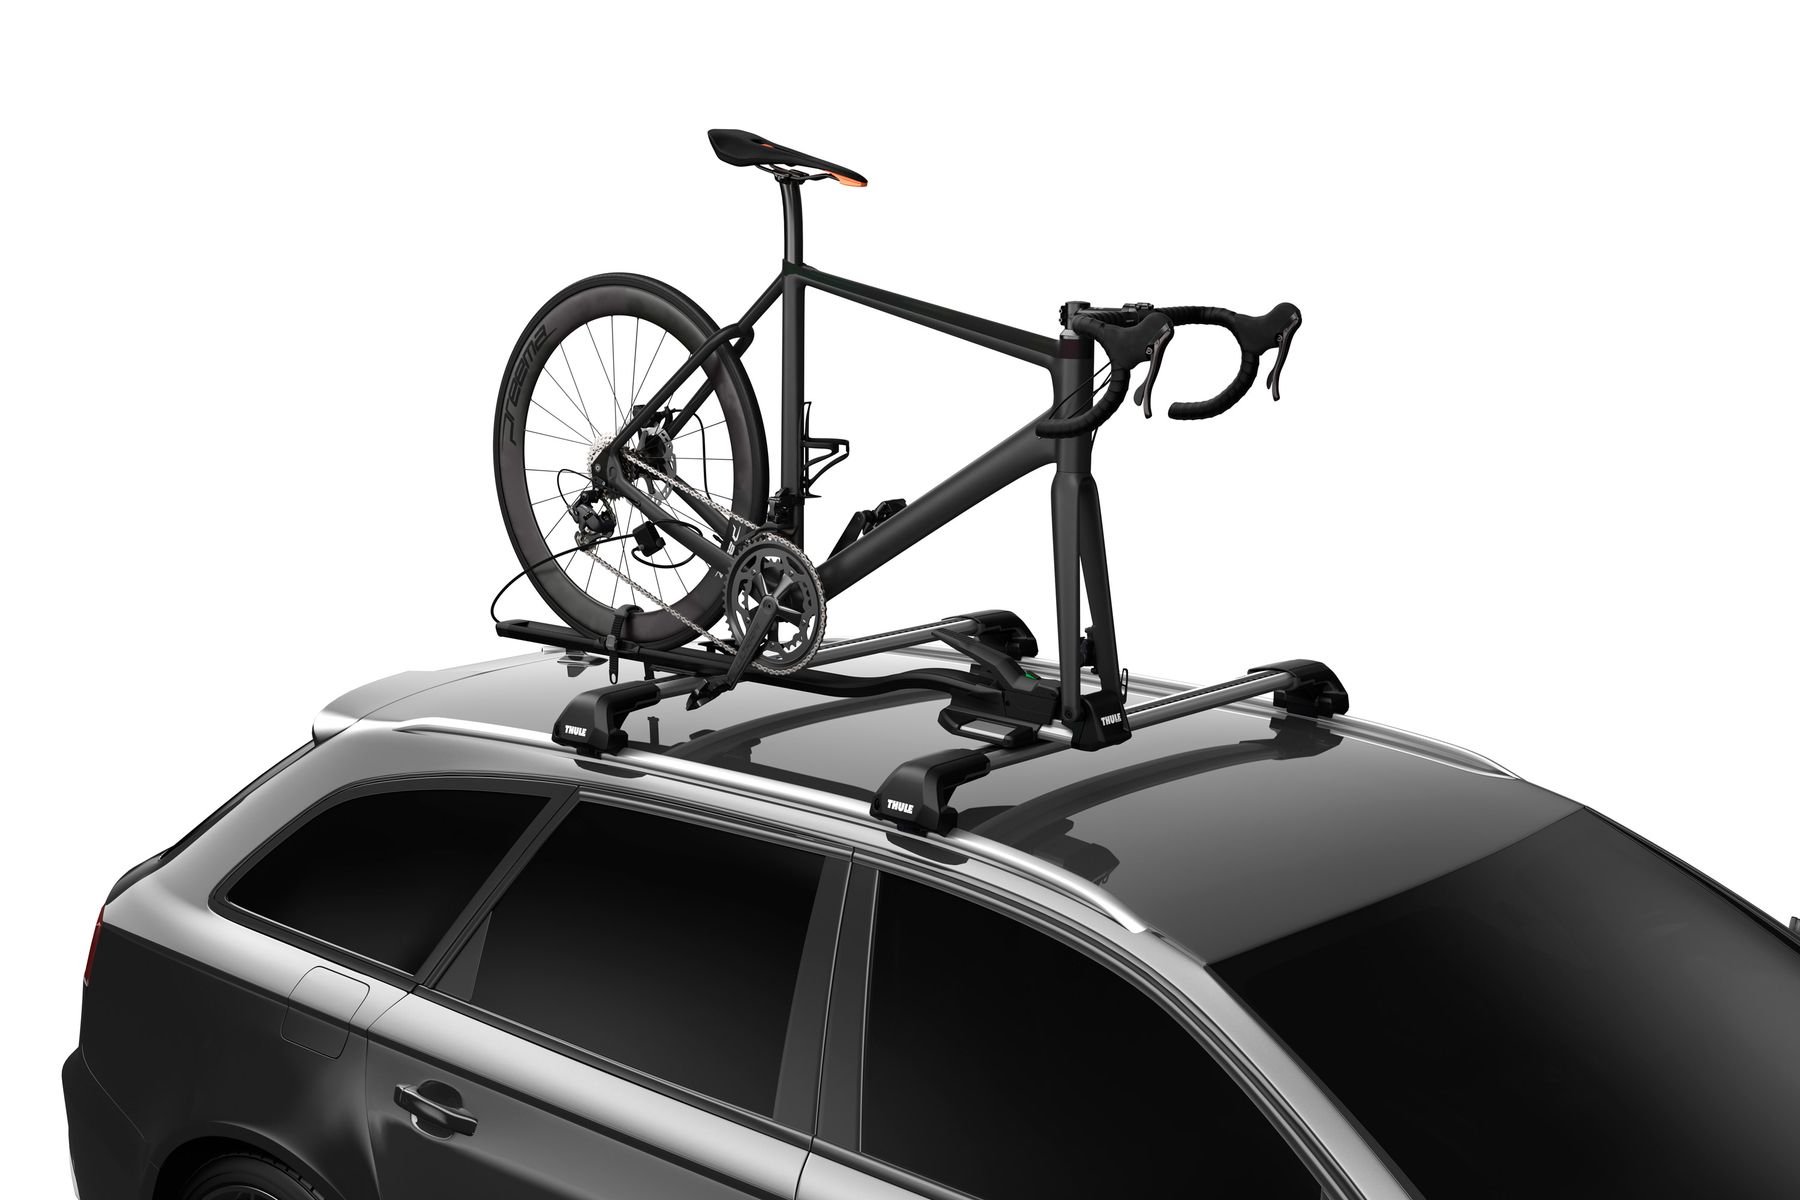 New Model Alu Cycle Carrier Roof Mounted Bike Bicycle Car Rack Holder Lockable 